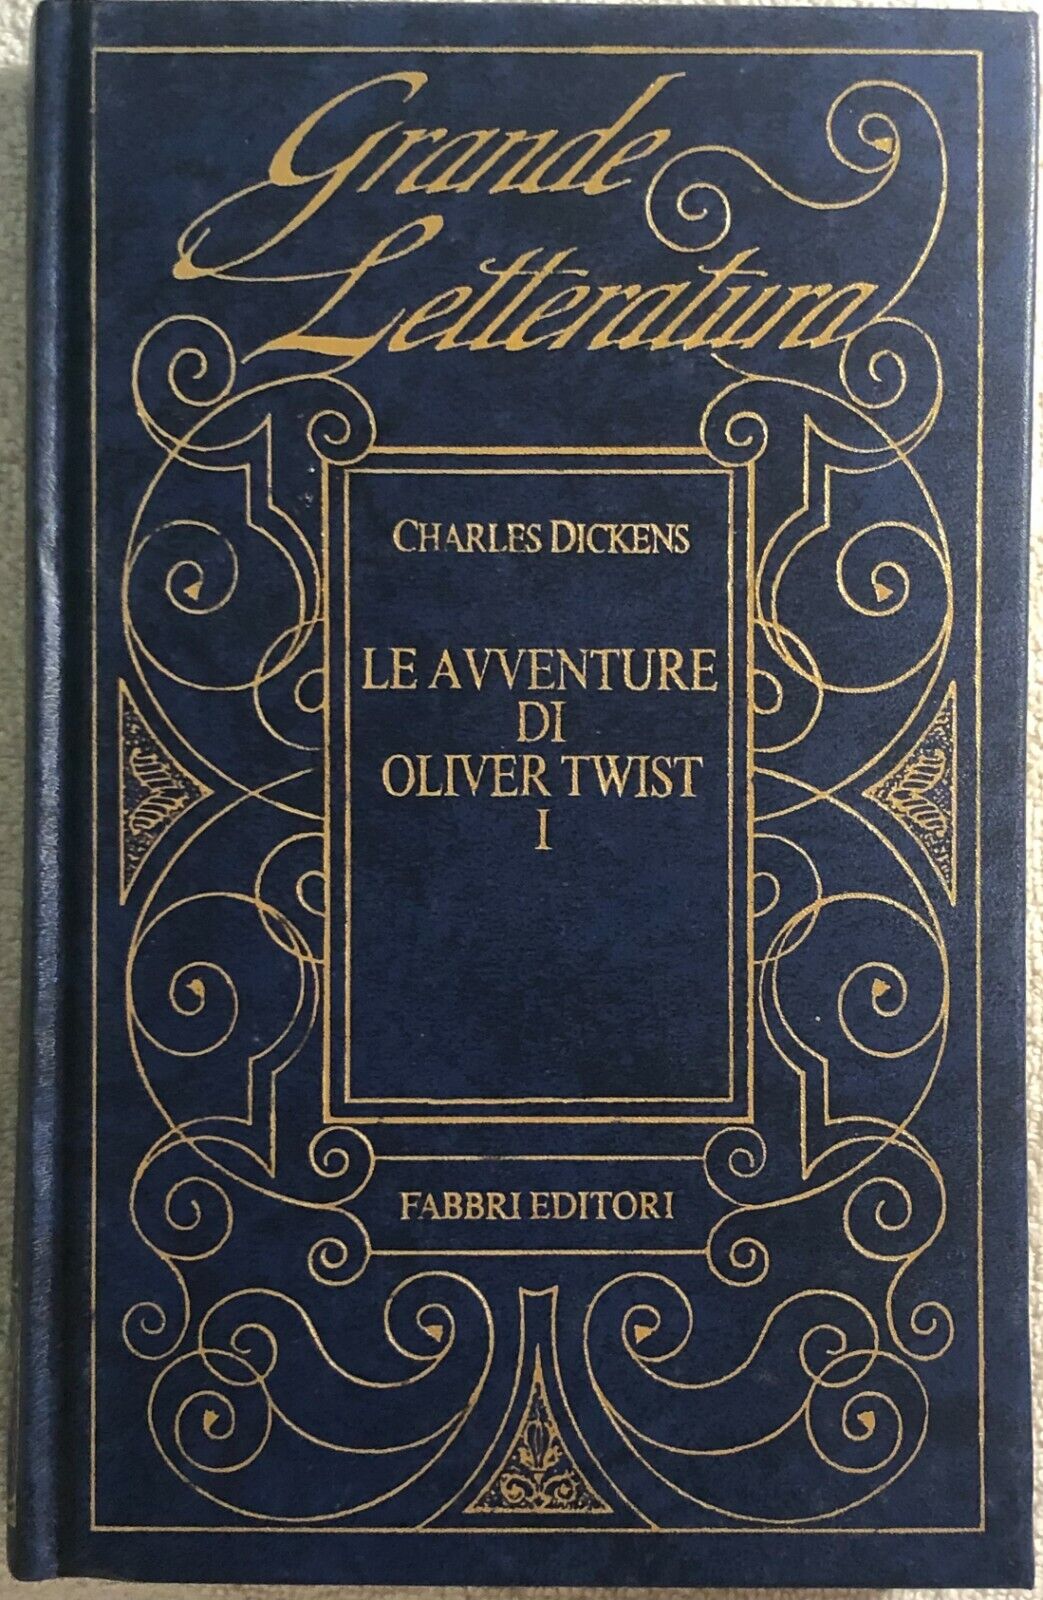 Le avventure di Oliver Twist II di Charles Dickens, 1993, Fabbri Editori